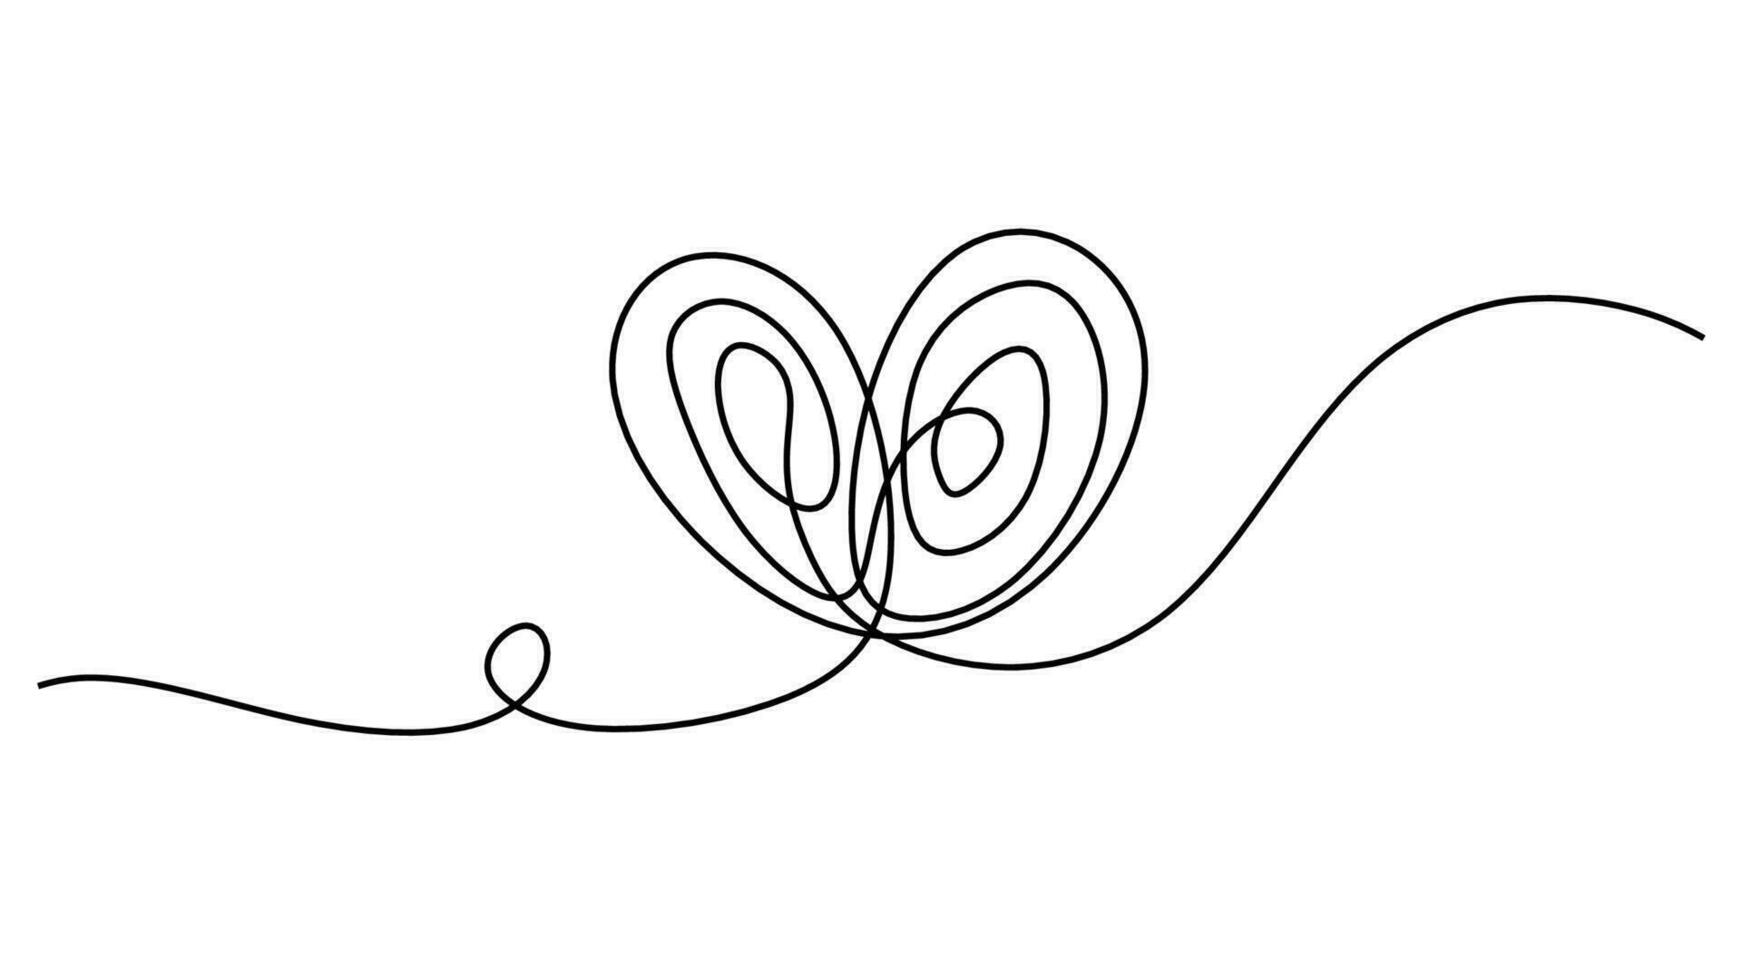 Love one line drawing, heart vector scribble art.